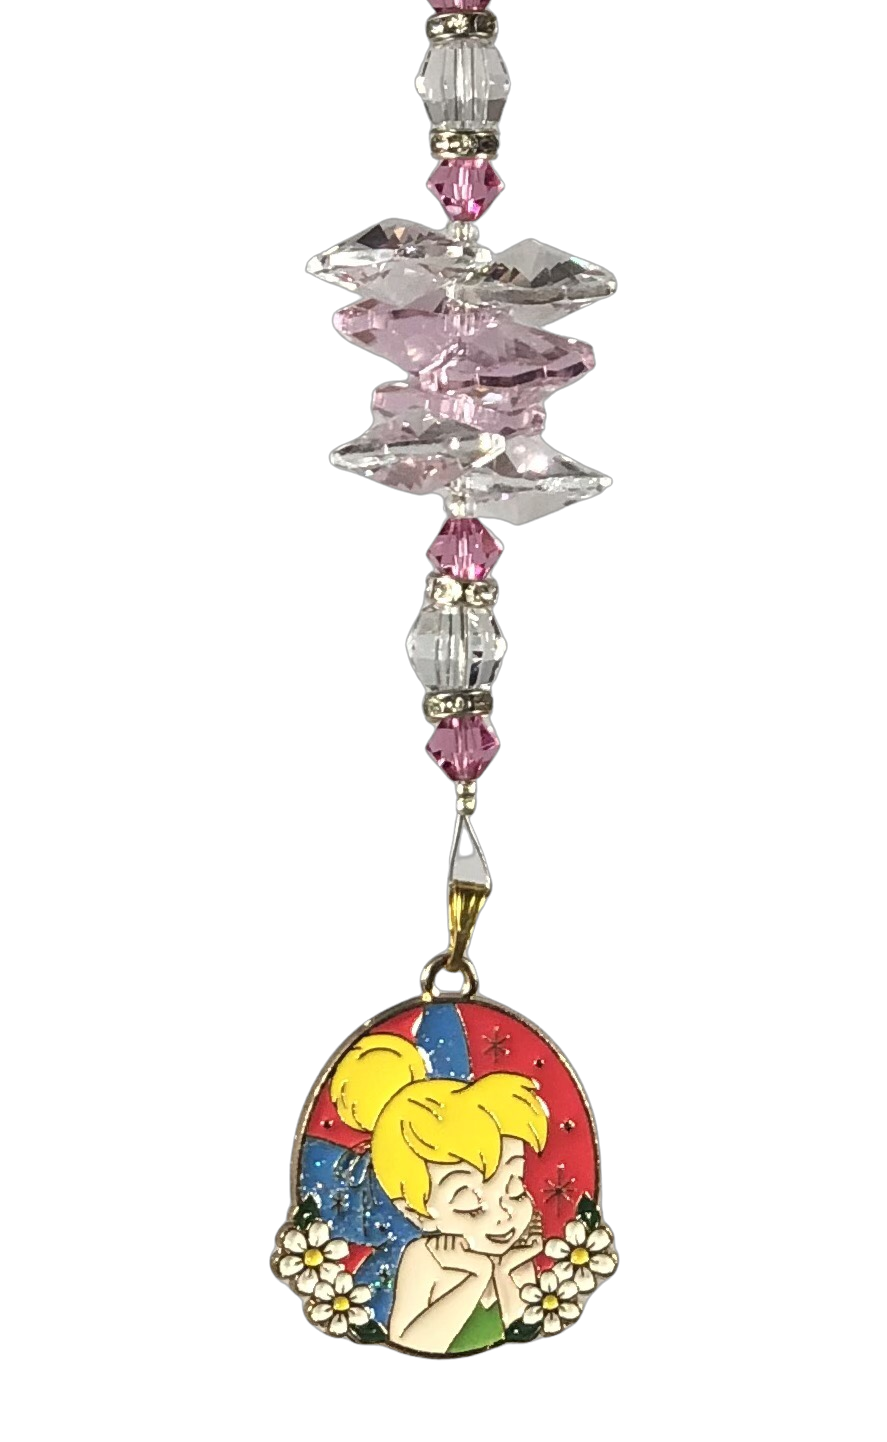 Tinker Bell - Disney Princess crystal suncatcher, decorated with Rose Quartz gemstone